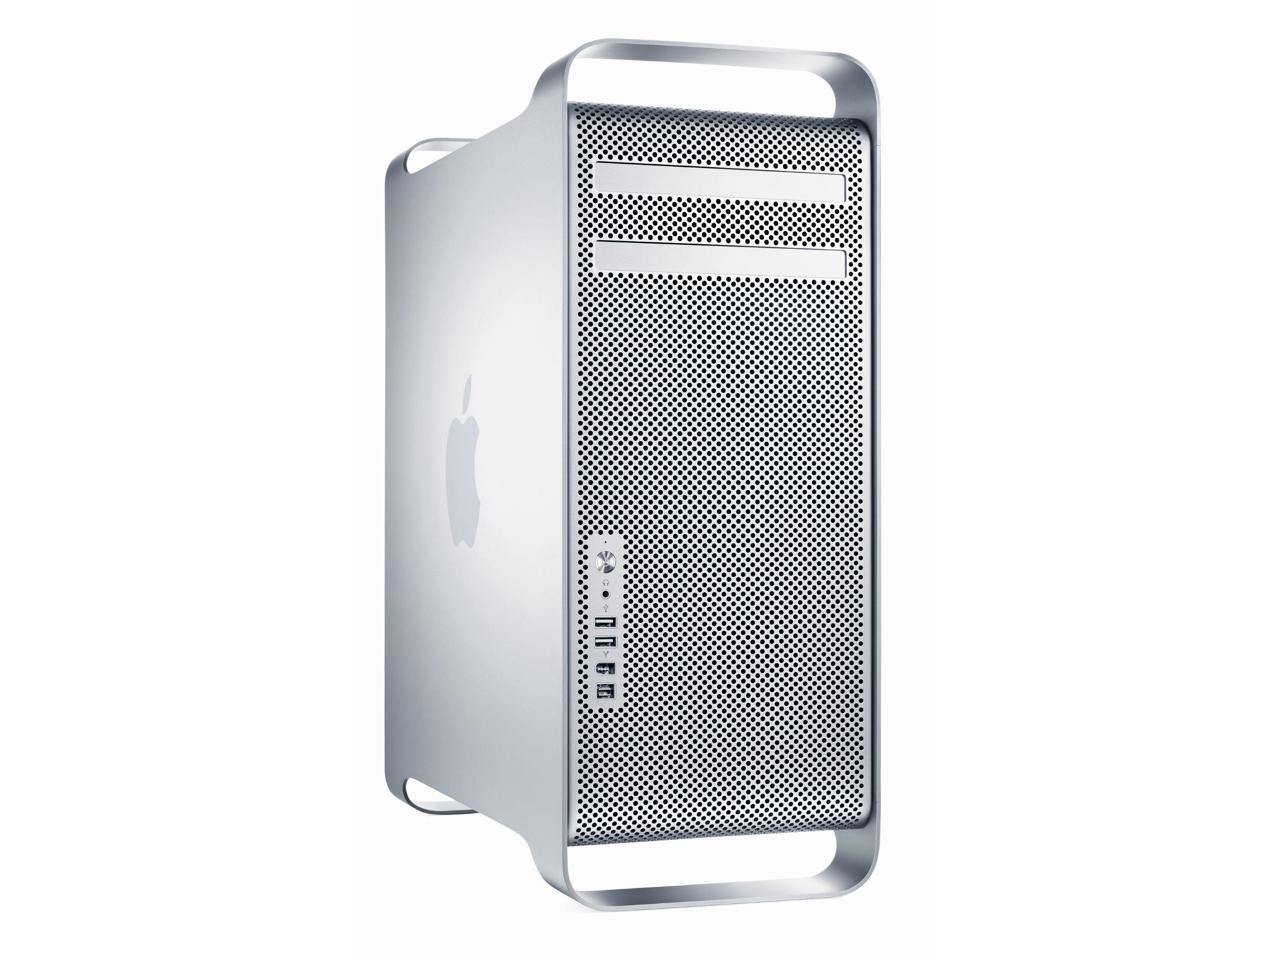 Mac Pro "Eight Core" 2.8 (3,1) A1186, MA970LL/A - 2x Quad Core Intel Xeon E5462@2.80GHz, 8GB RAM, 500GB HDD, 8X DL SuperDrive, OSX 10.5 - Atlas Computers & Electronics 